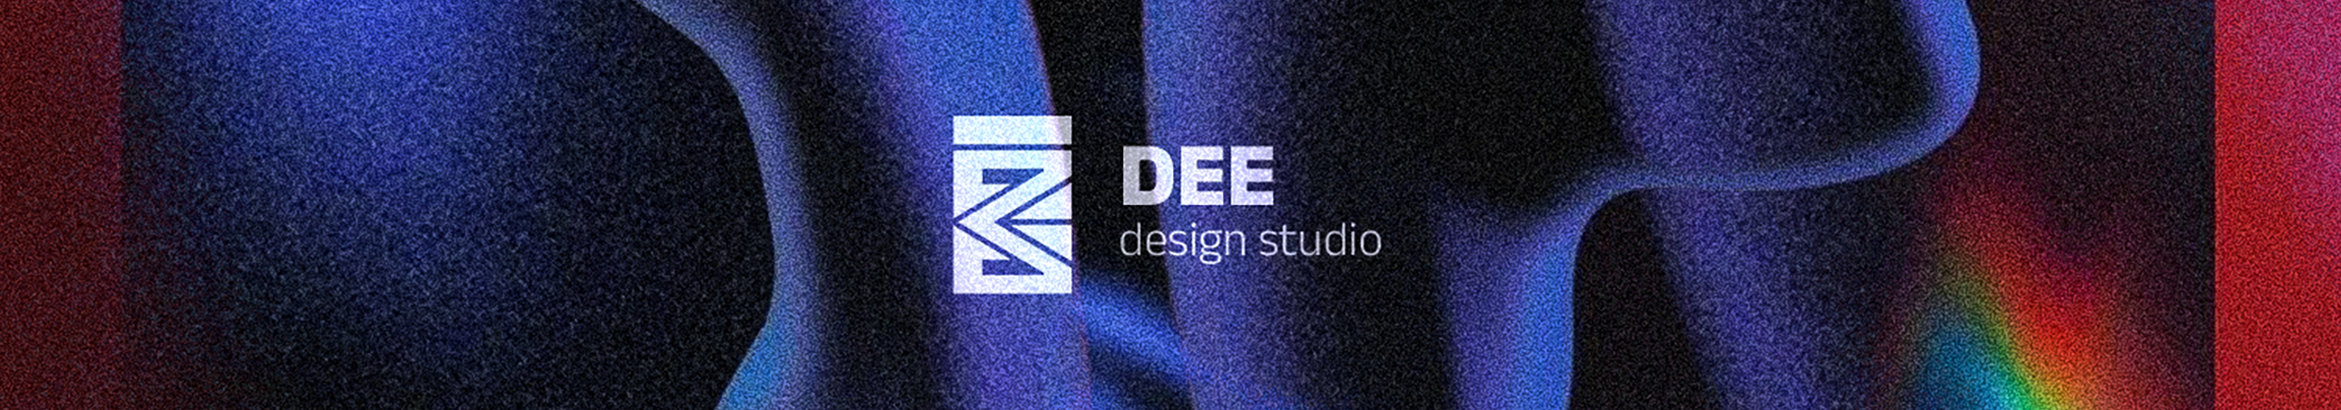 DEE DEE's profile banner